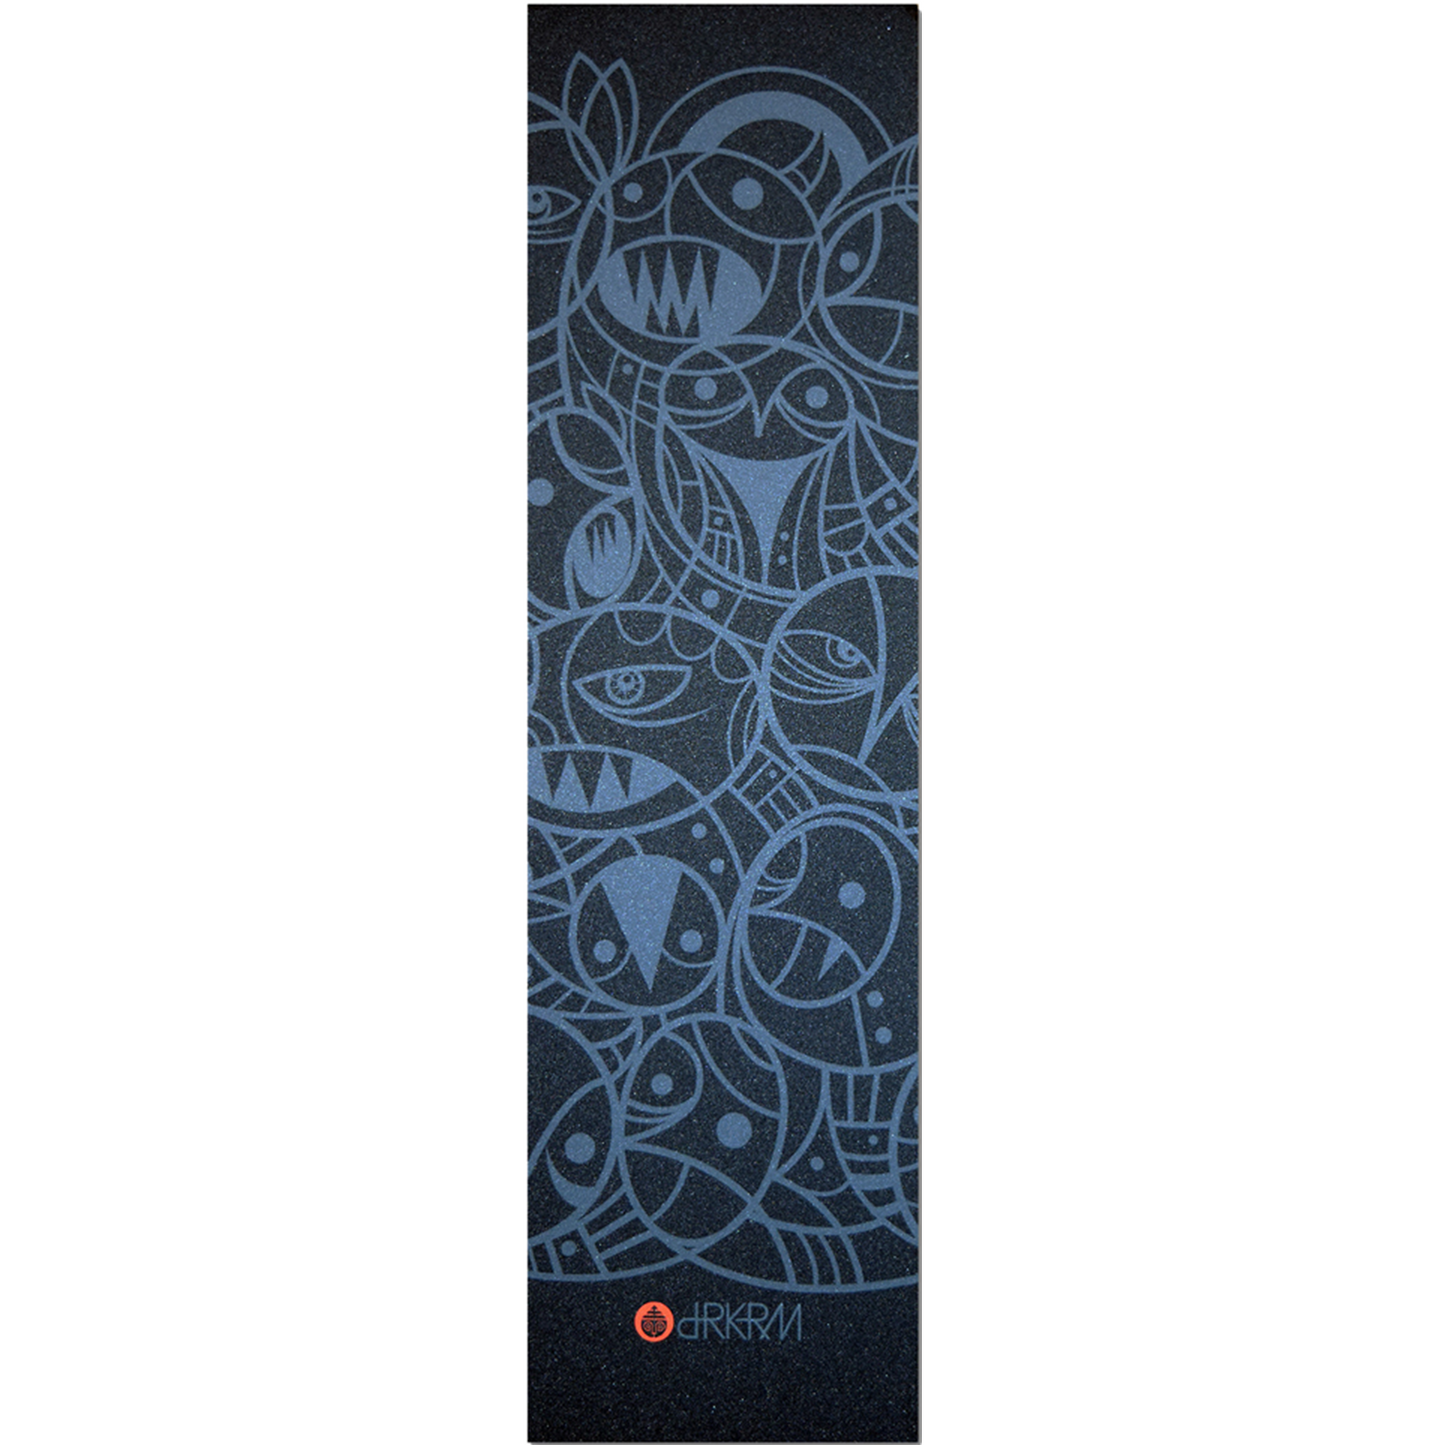 Darkroom Skateboard Grips - BRAND NEW 100% ORIGINAL